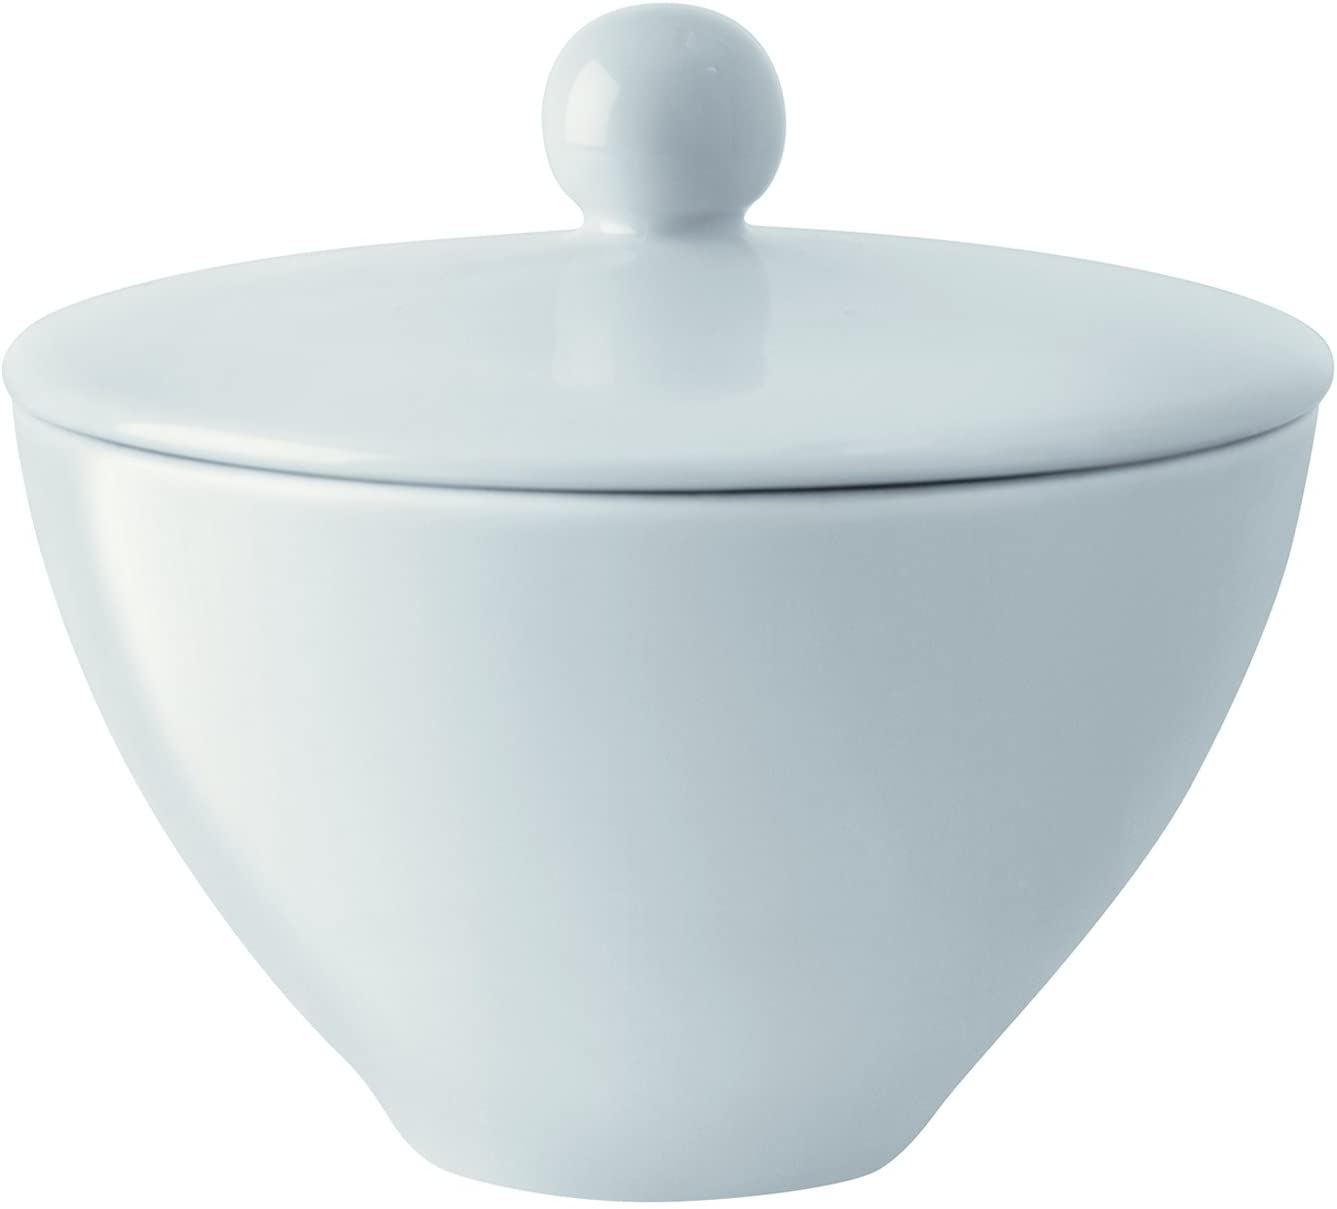 LSA International Sugar bowl and lid, white.